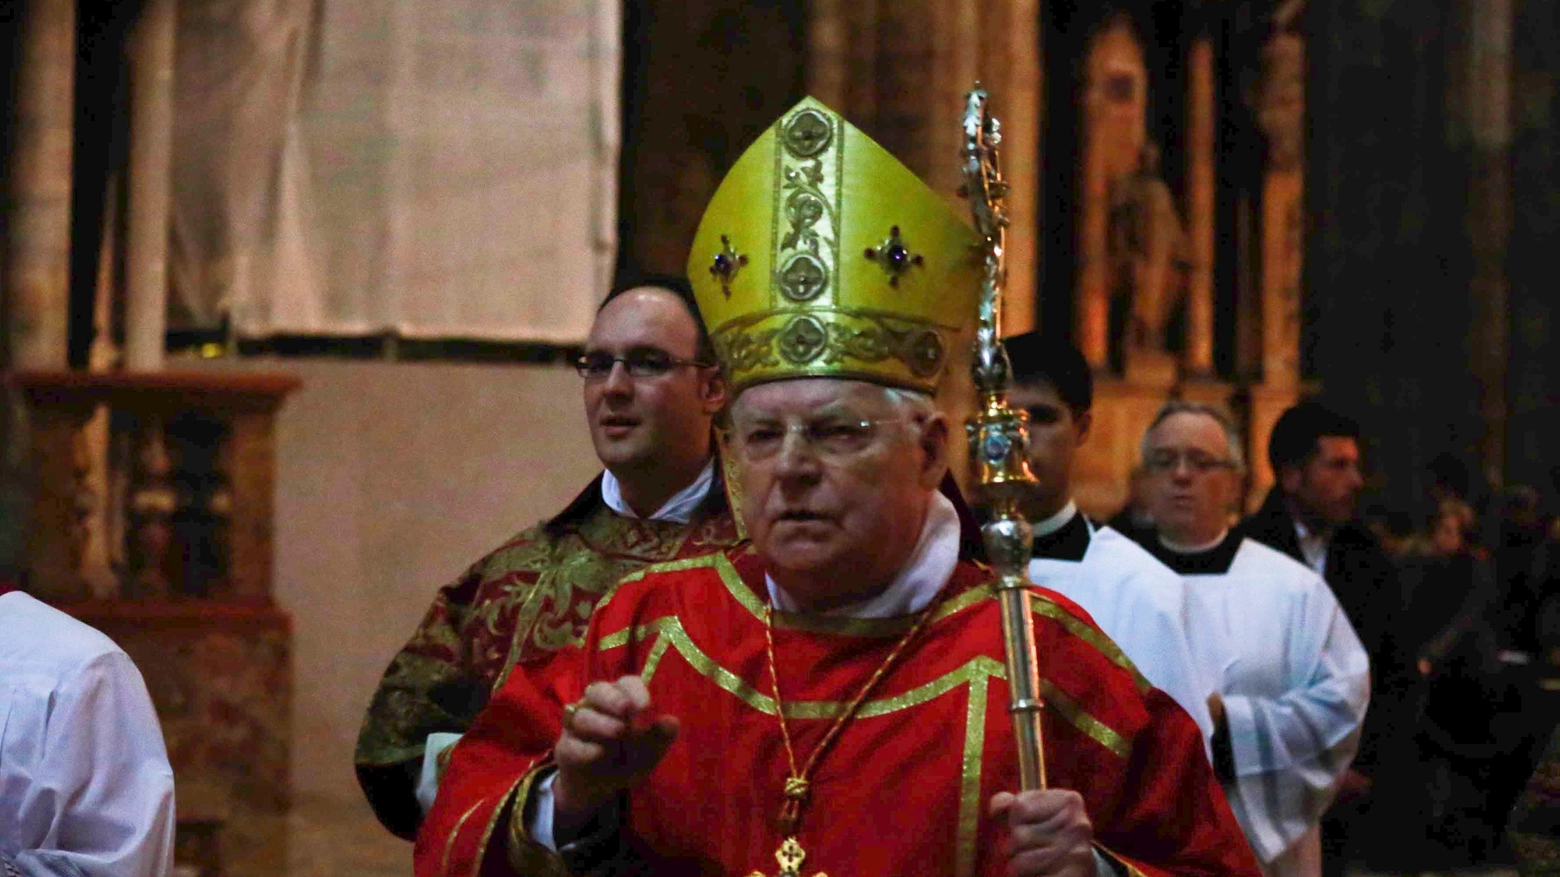 Il cardinale Angelo Scola